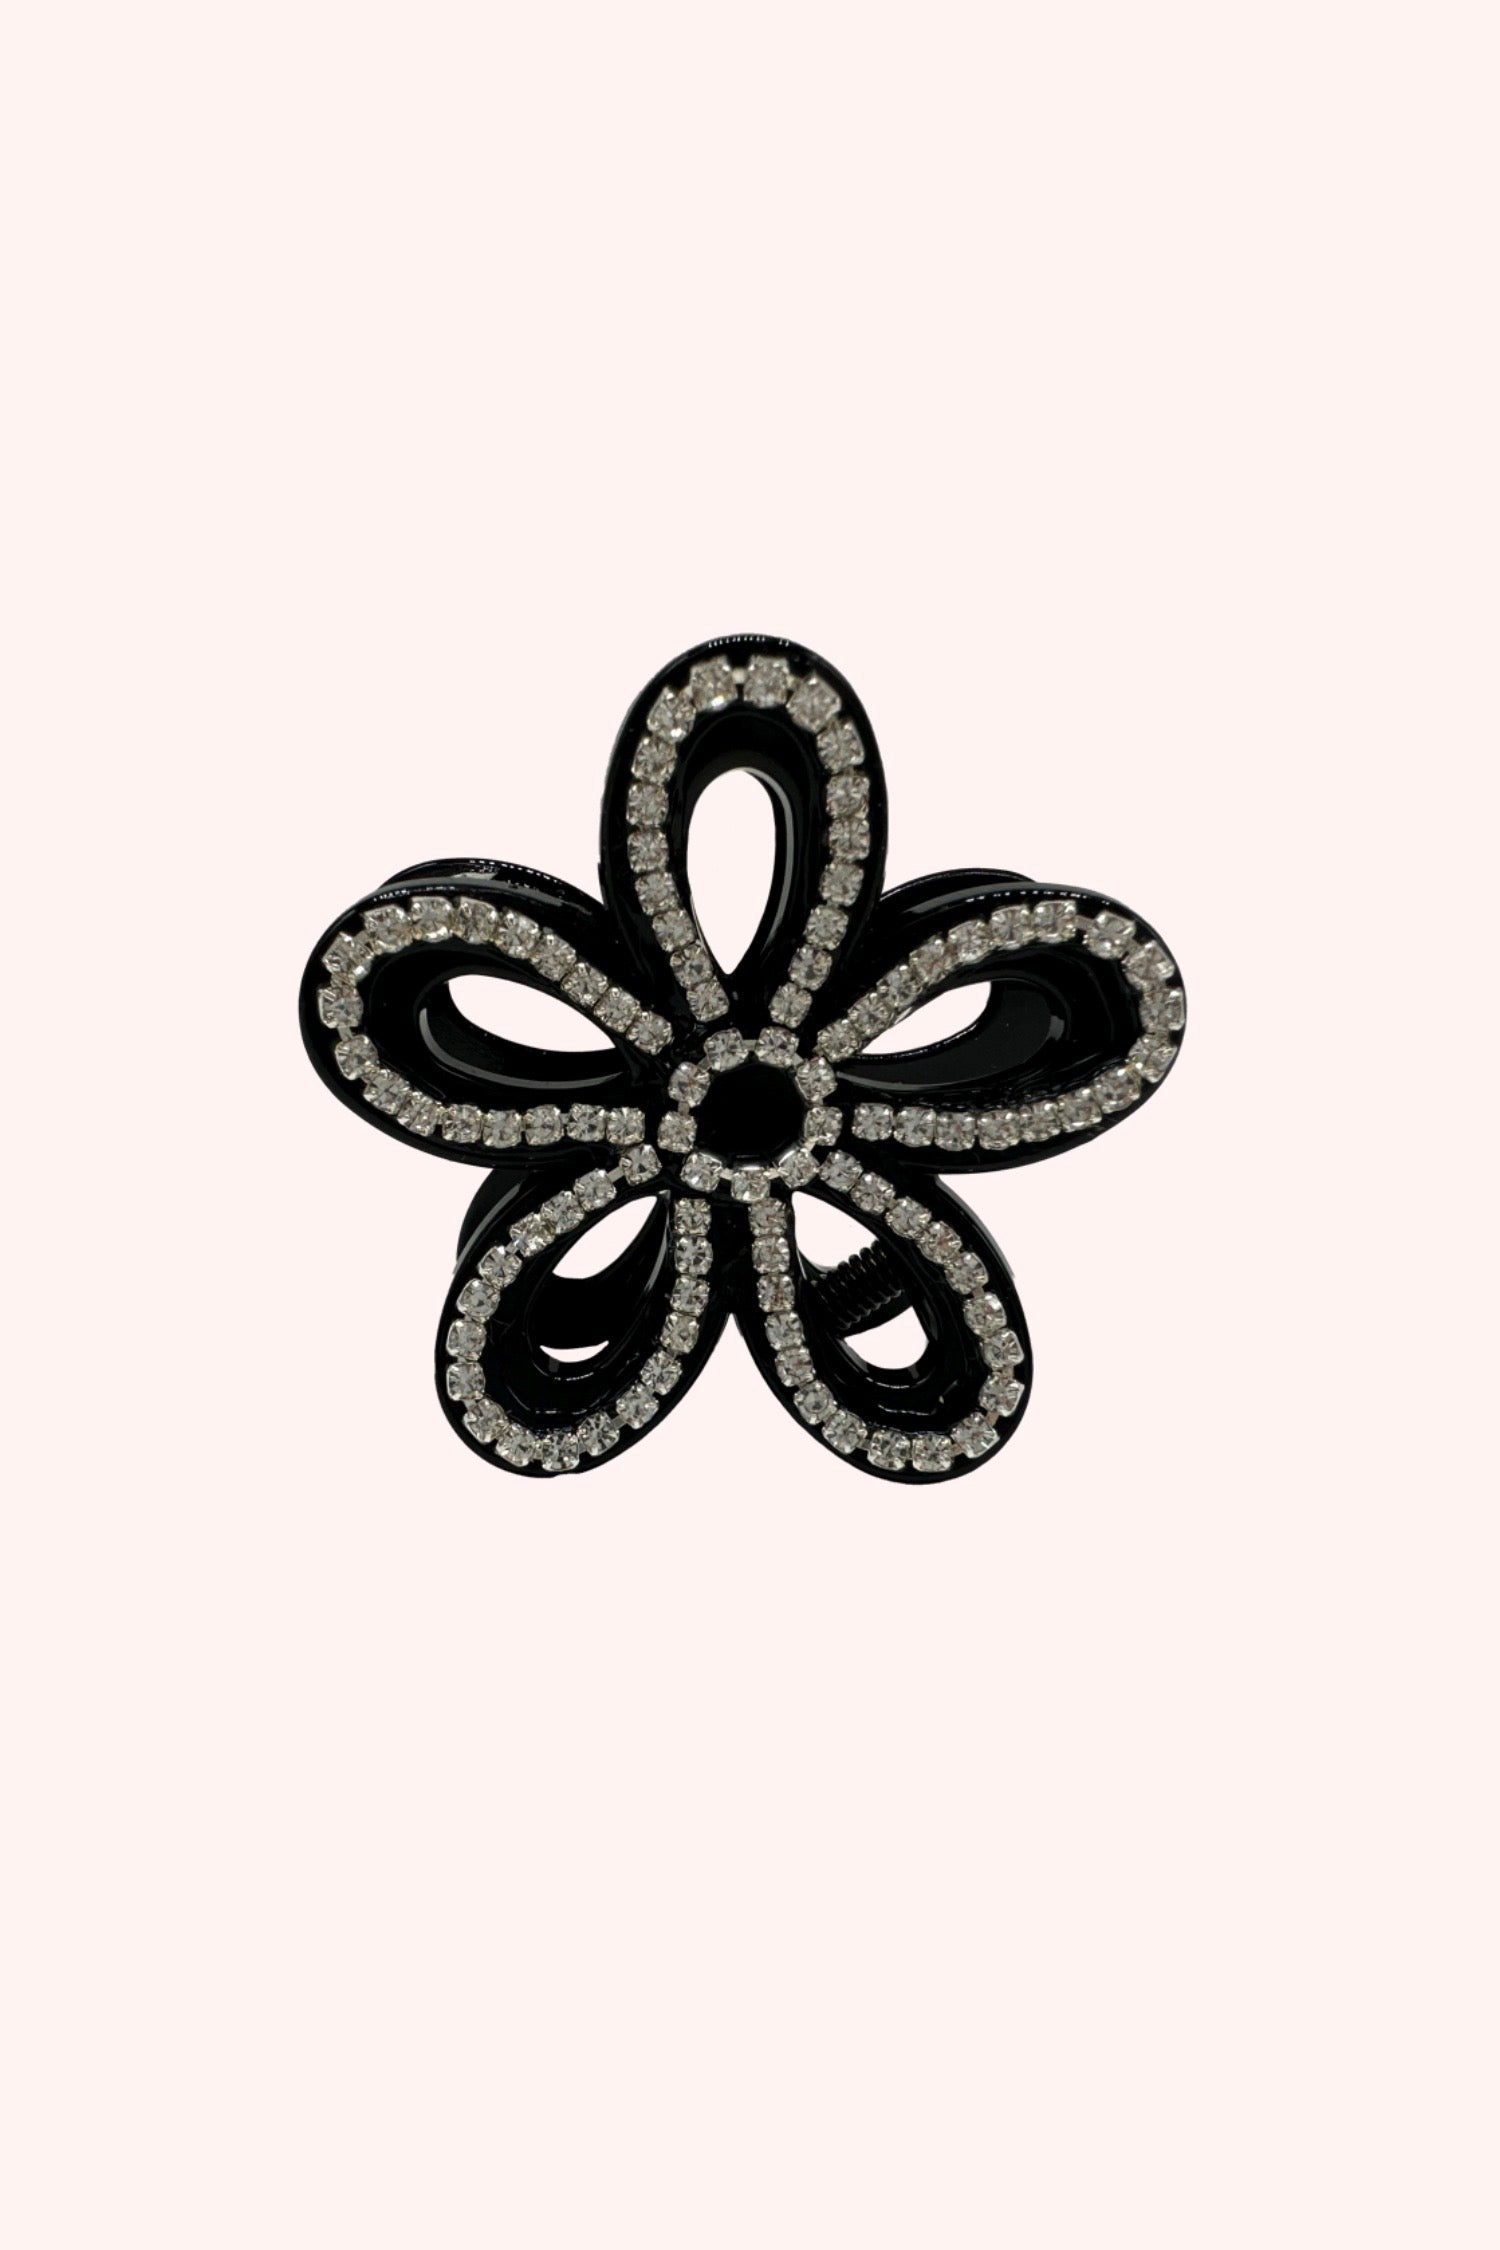 Flower Jaw Clip, 5-hollow petal flower, round center, rhinestone gemstone on the black on edge 